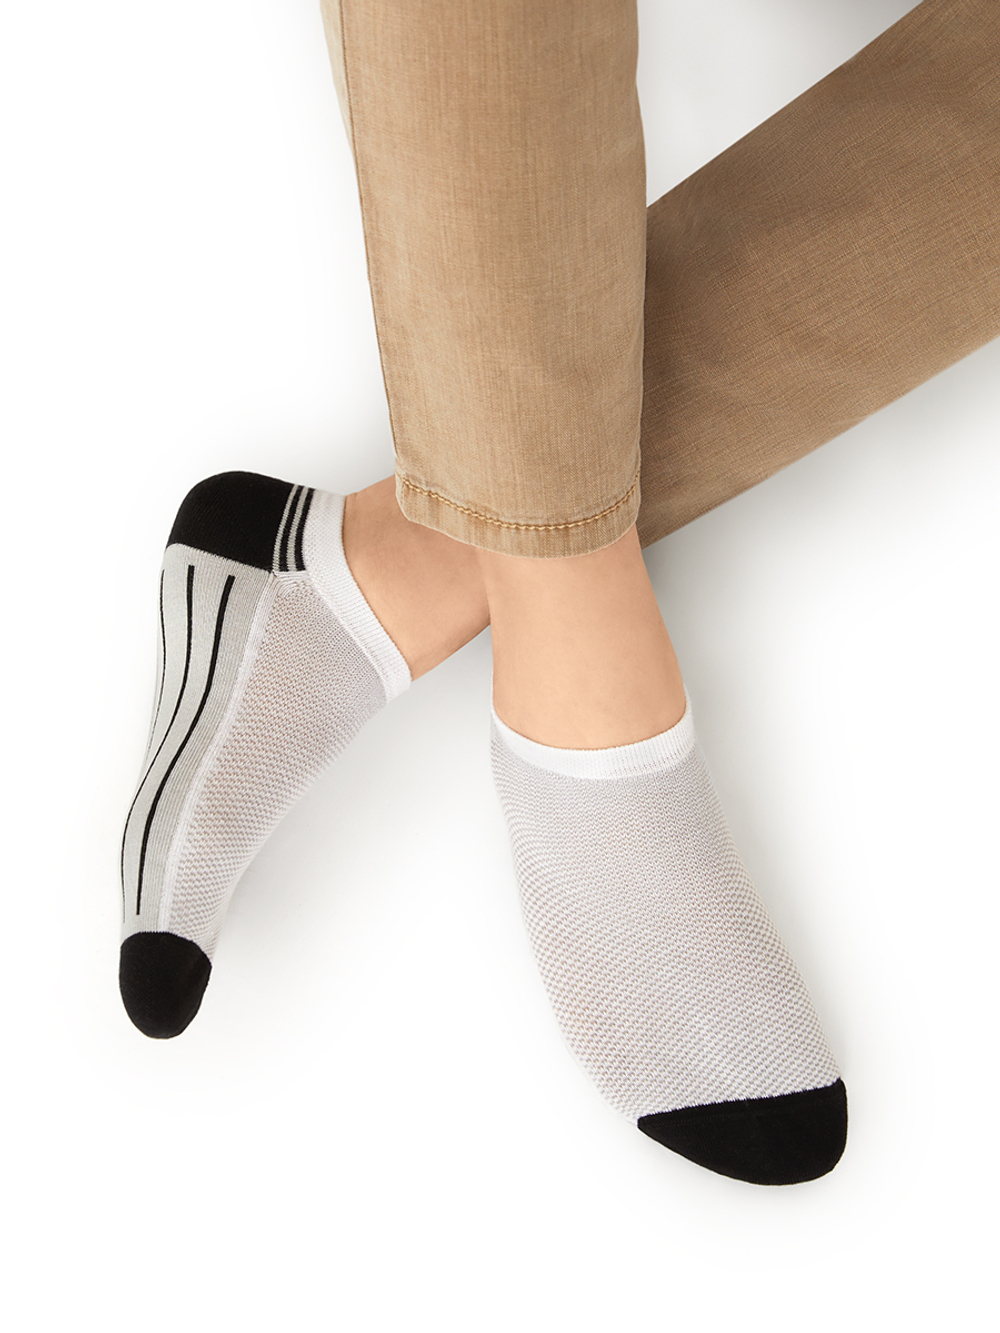 OMSA ACTIVE 109 укороченный (мужские носки)